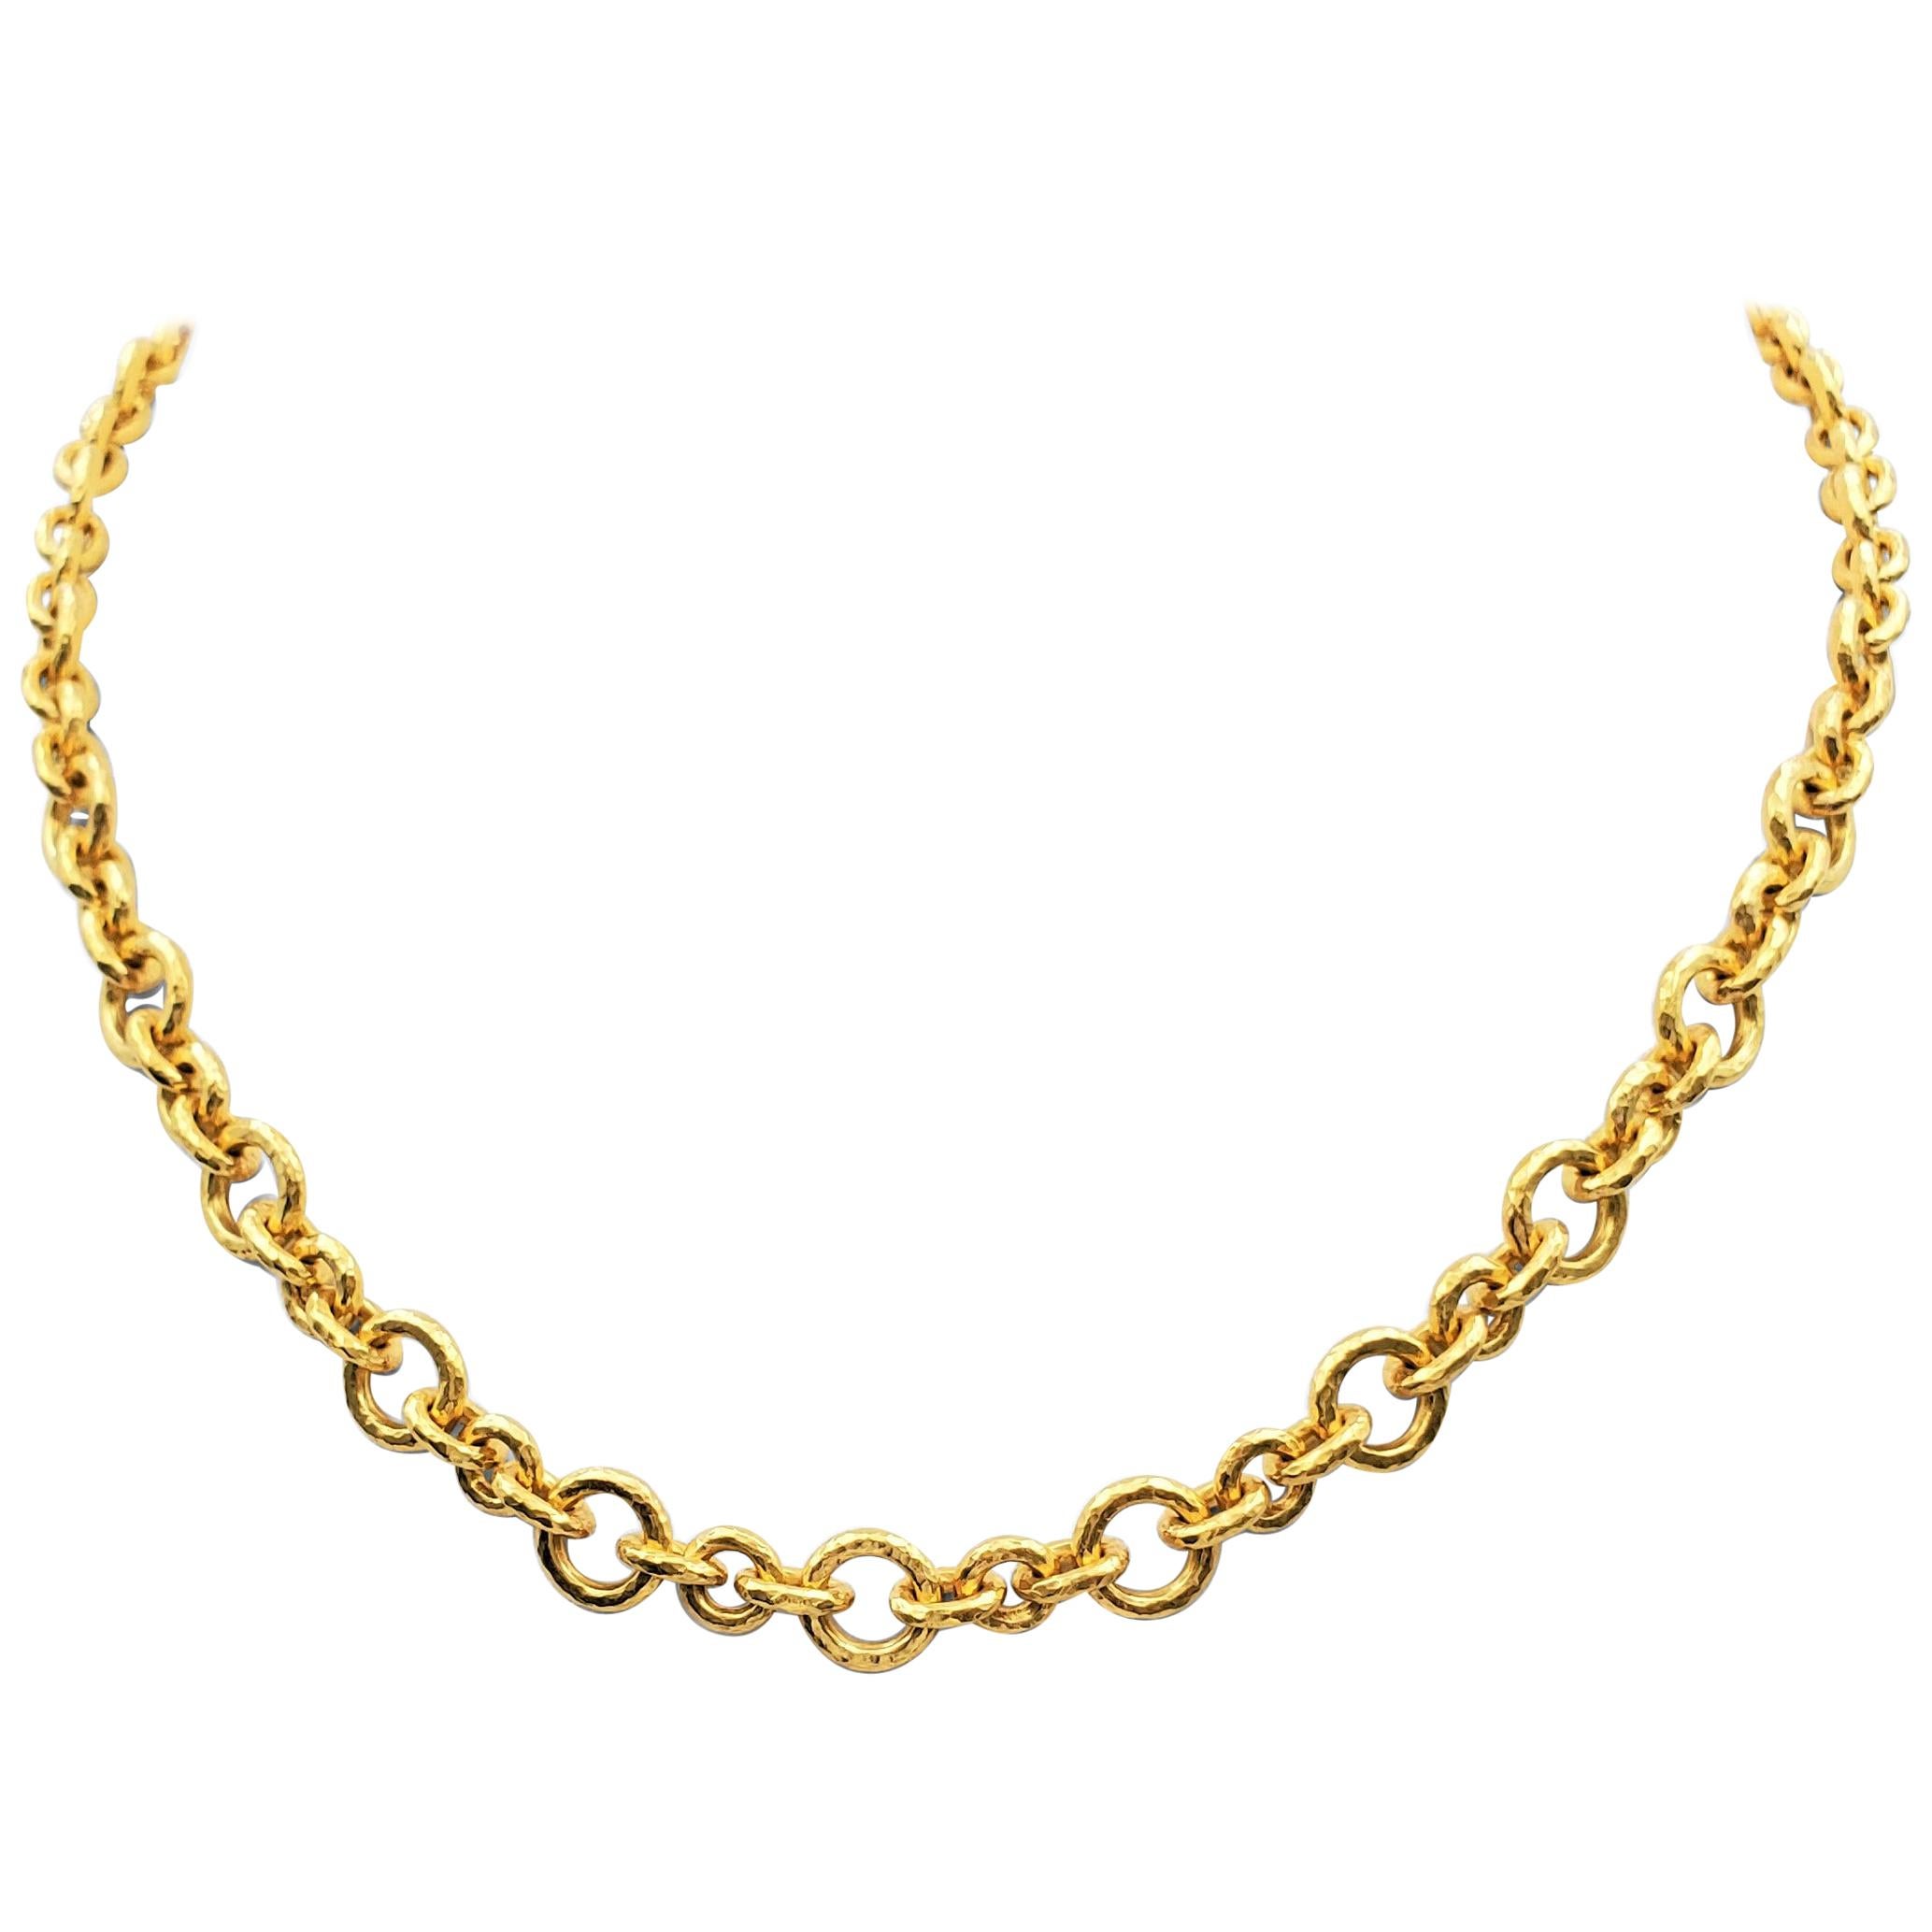 Elizabeth Locke 19 Karat Gold Toggle Necklace